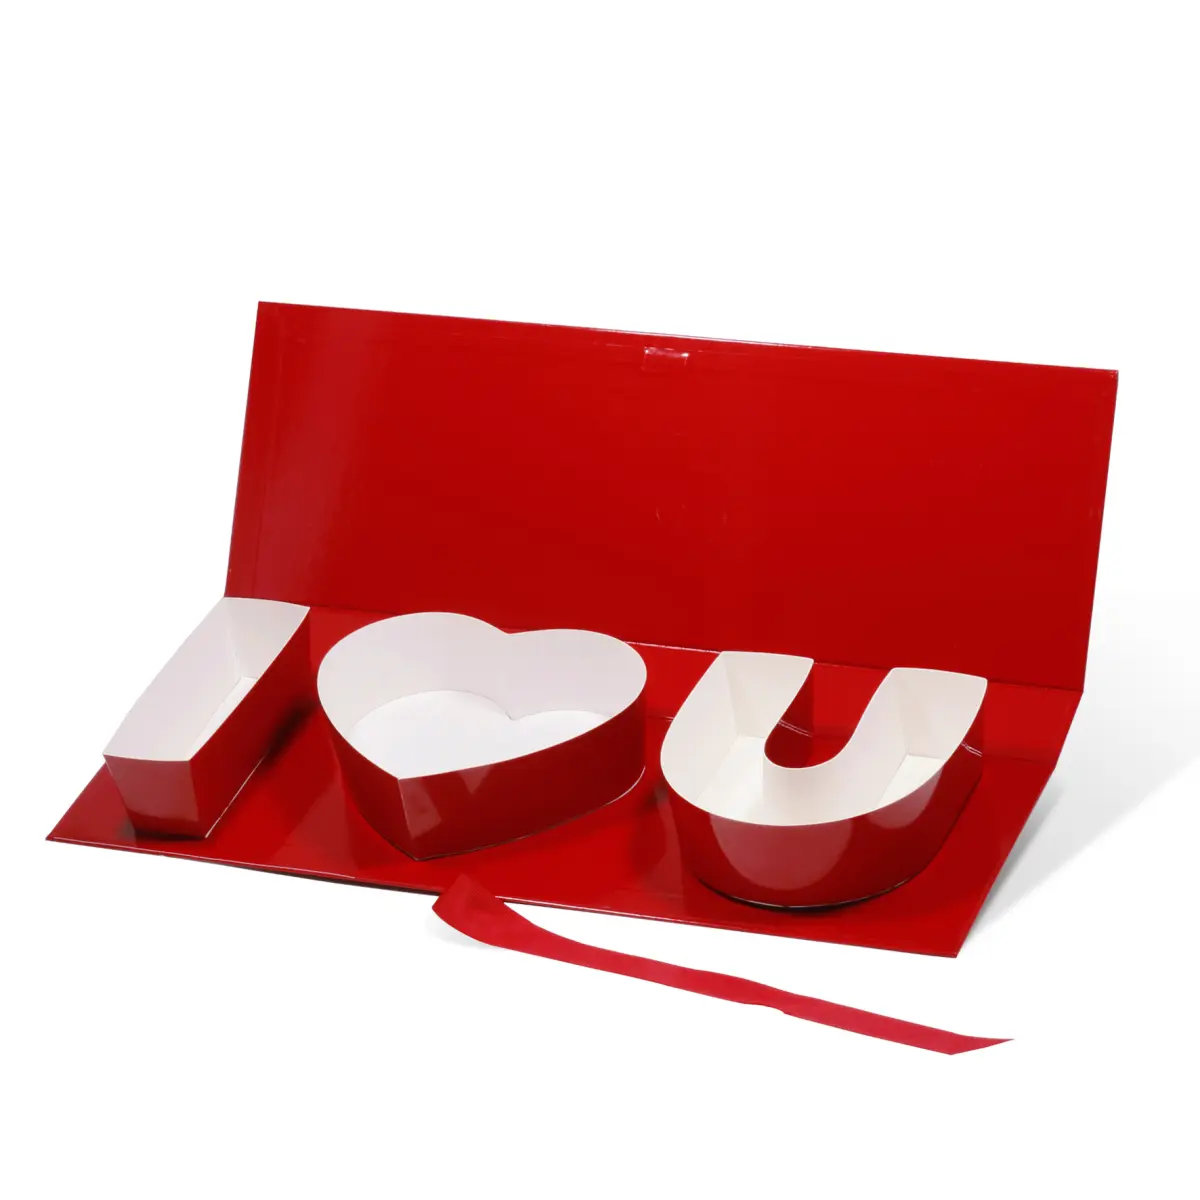 Red Big Heart Shaped Gift Box